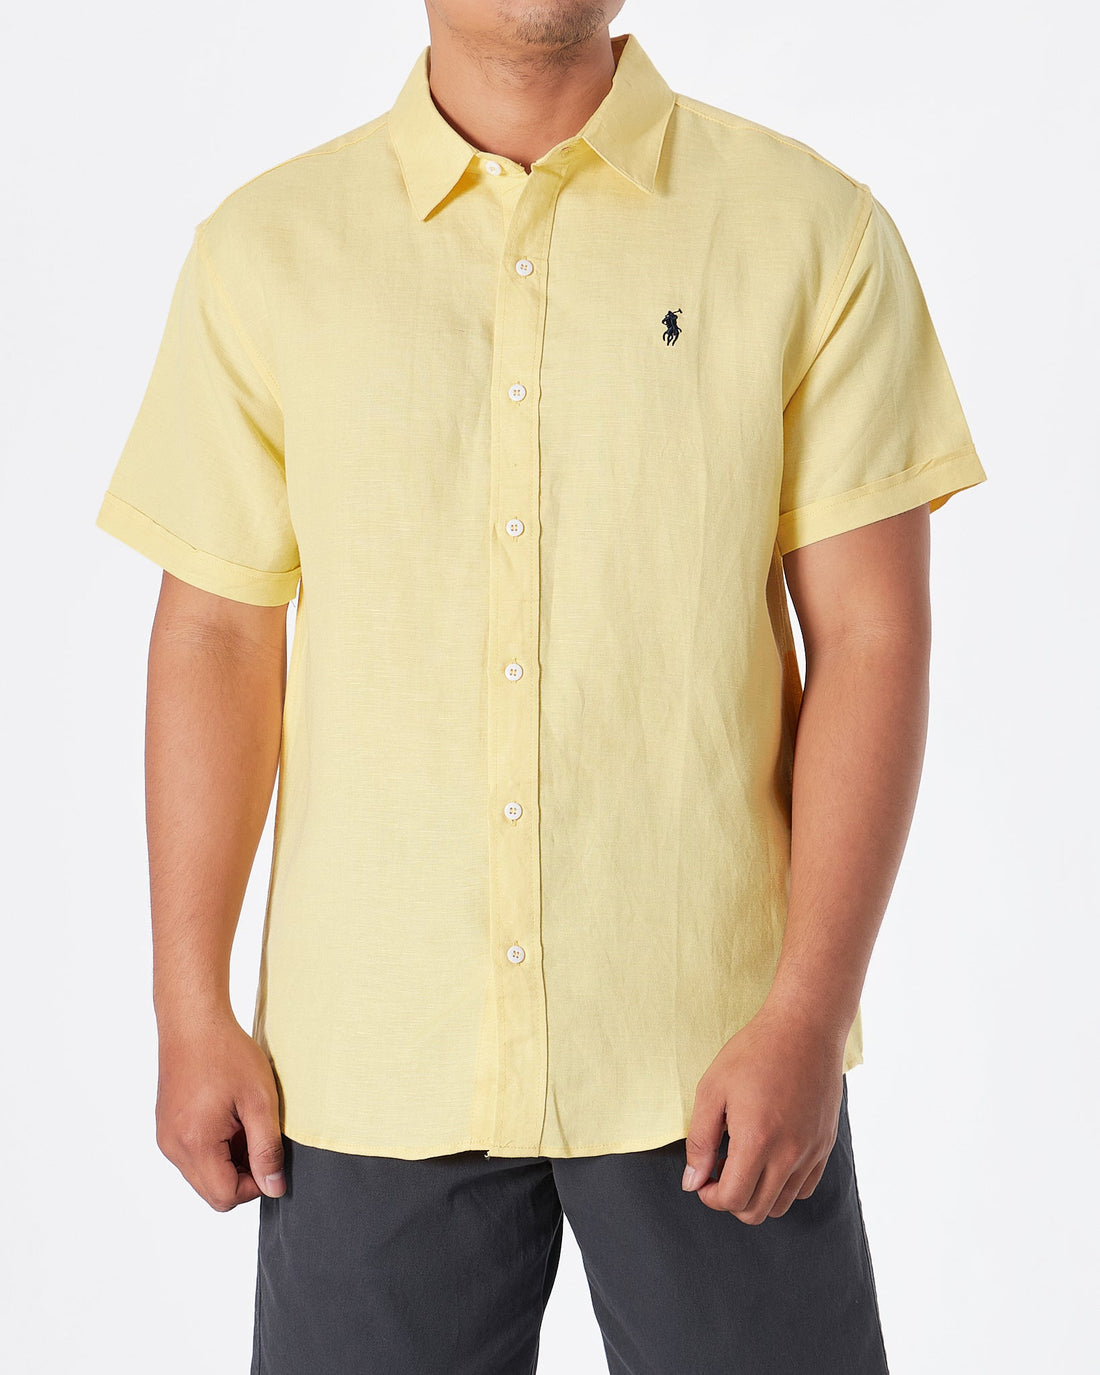 MOI OUTFIT-RL Cotton Men Yellow Shirts Short Sleeve 28.90